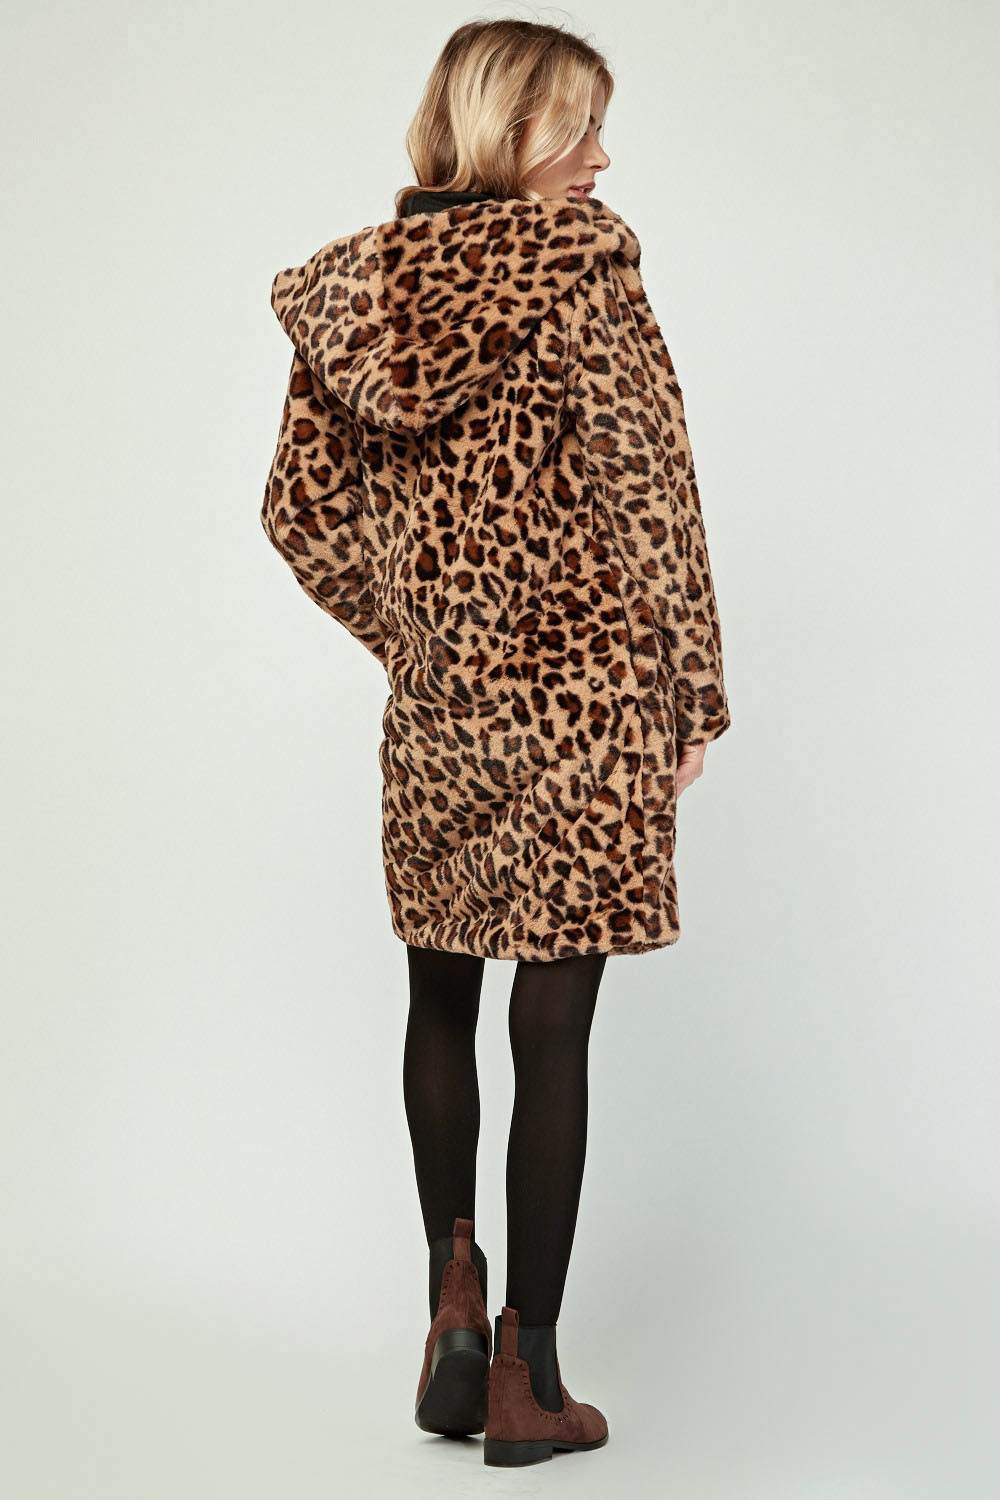 Leopard Print Faux Fur Hooded Coat - Just $48